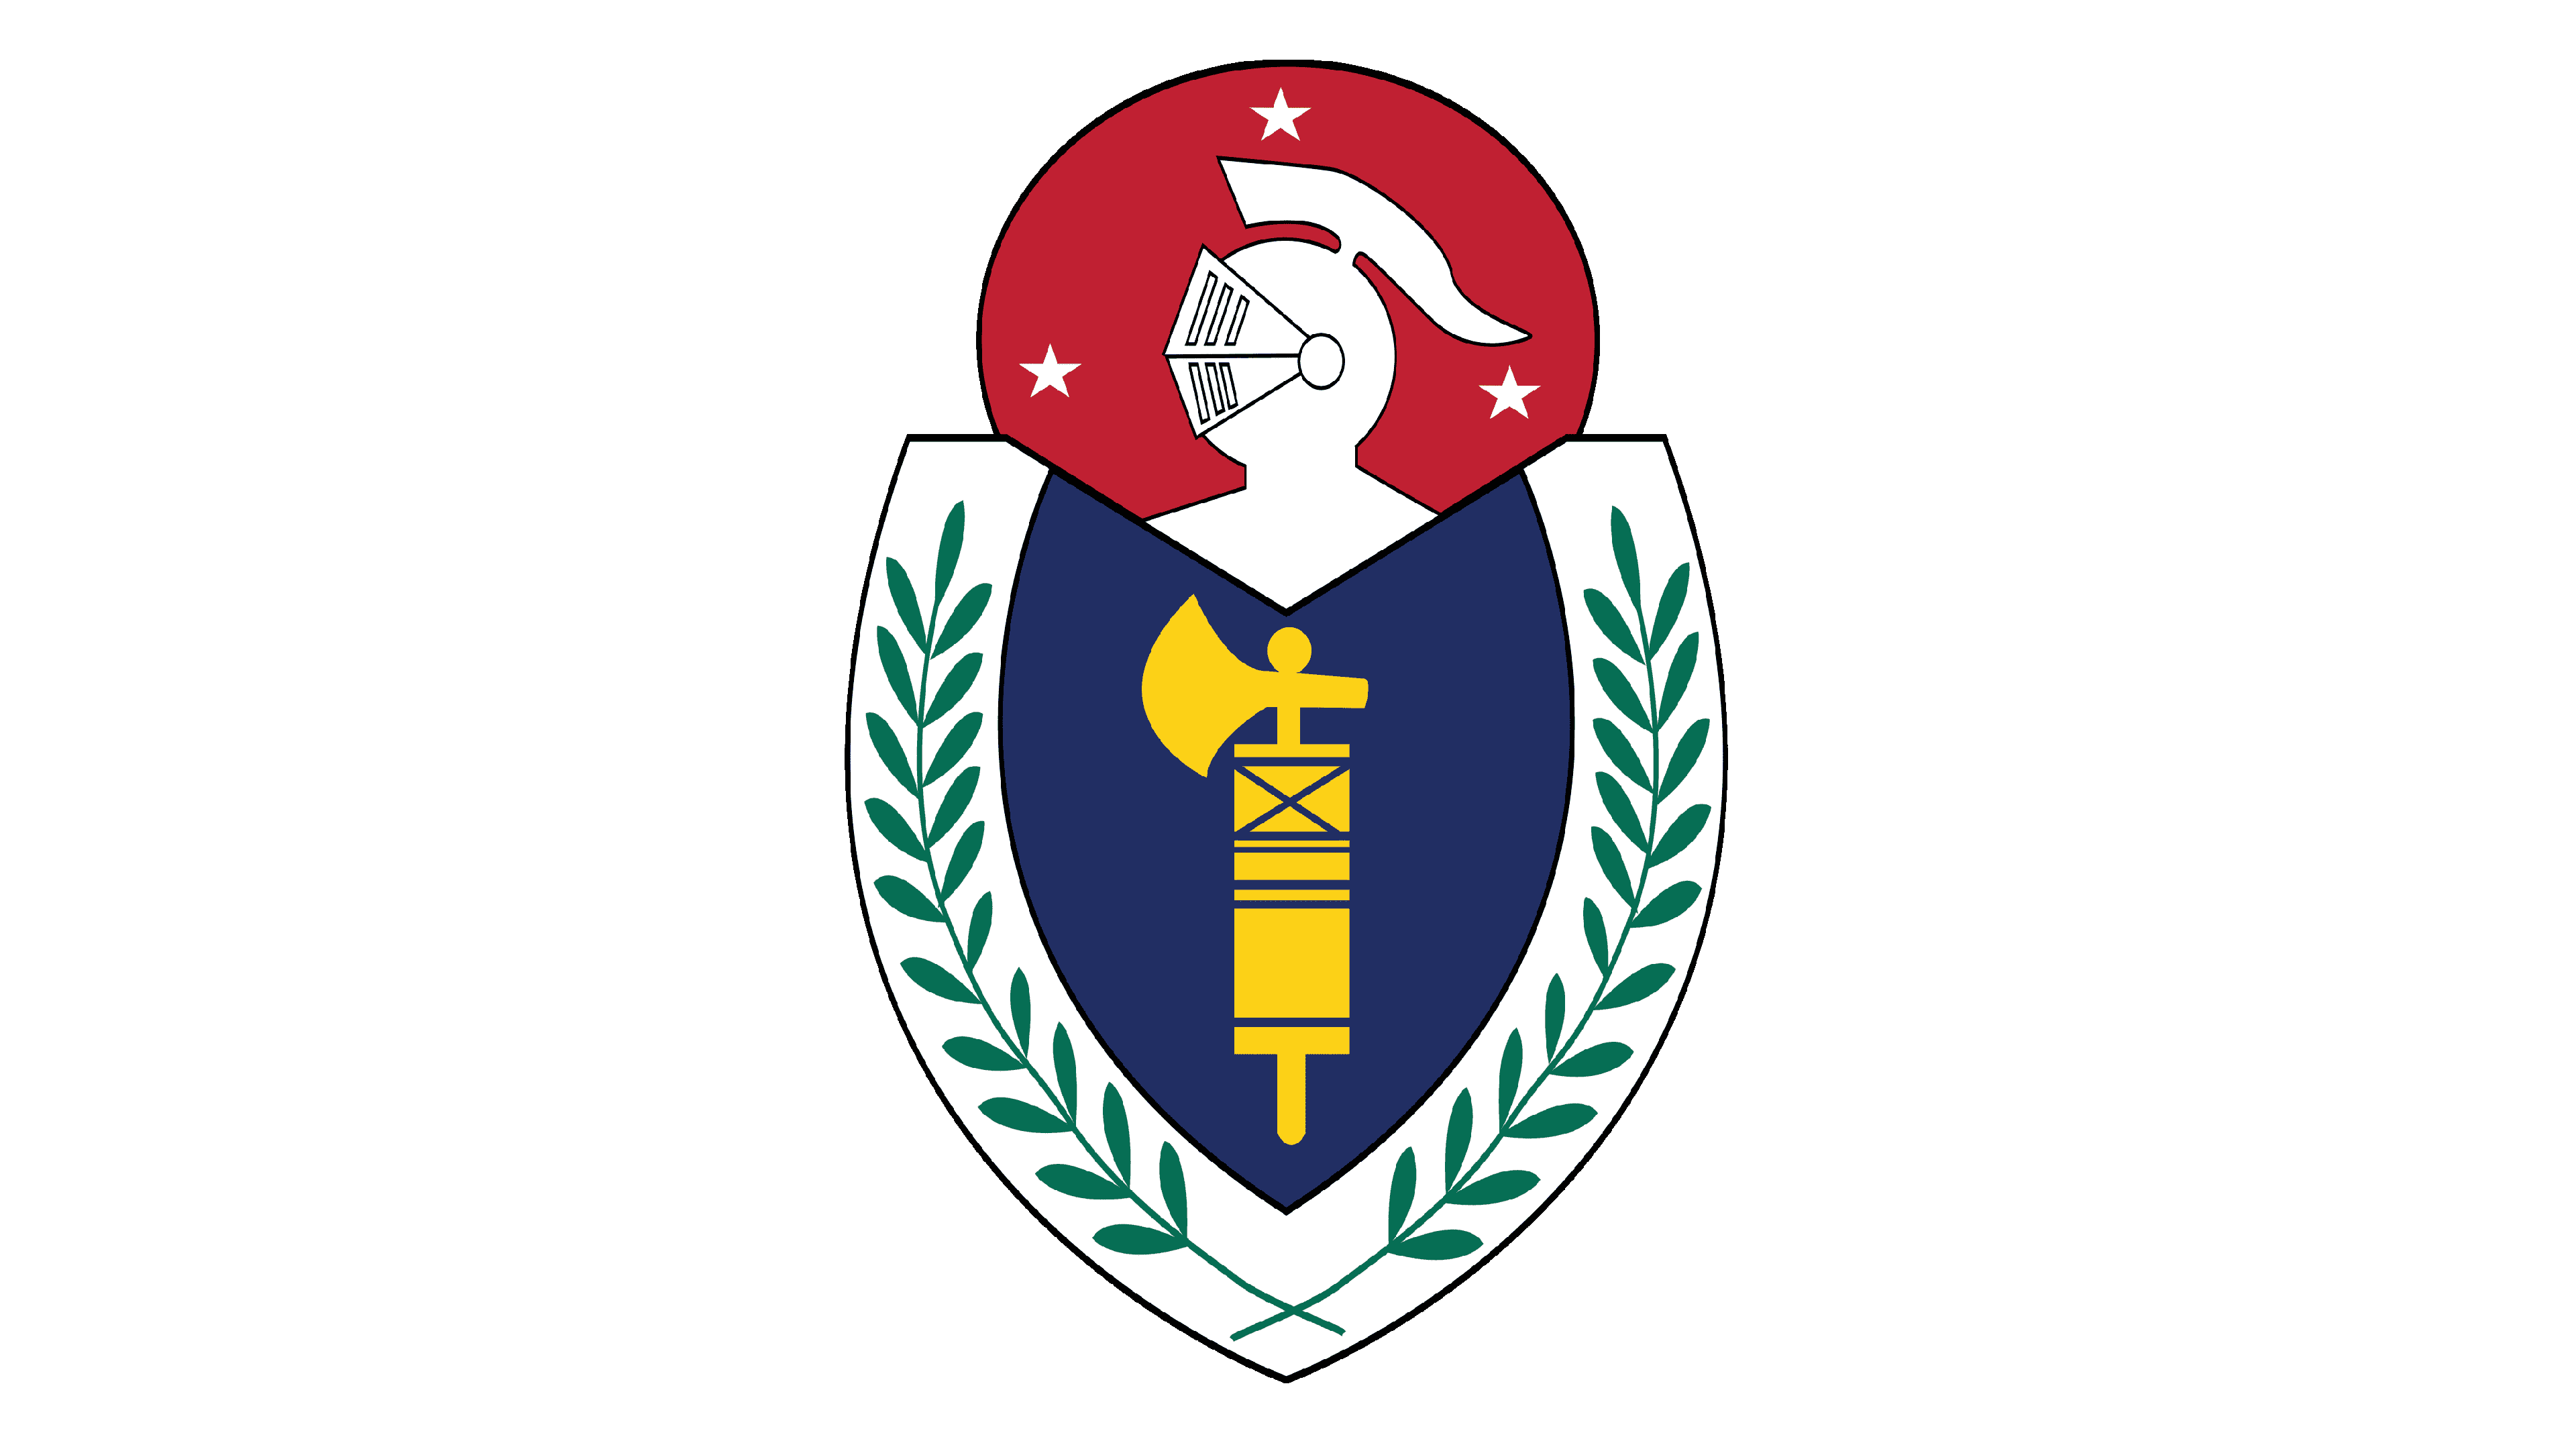 philippine national police logo black